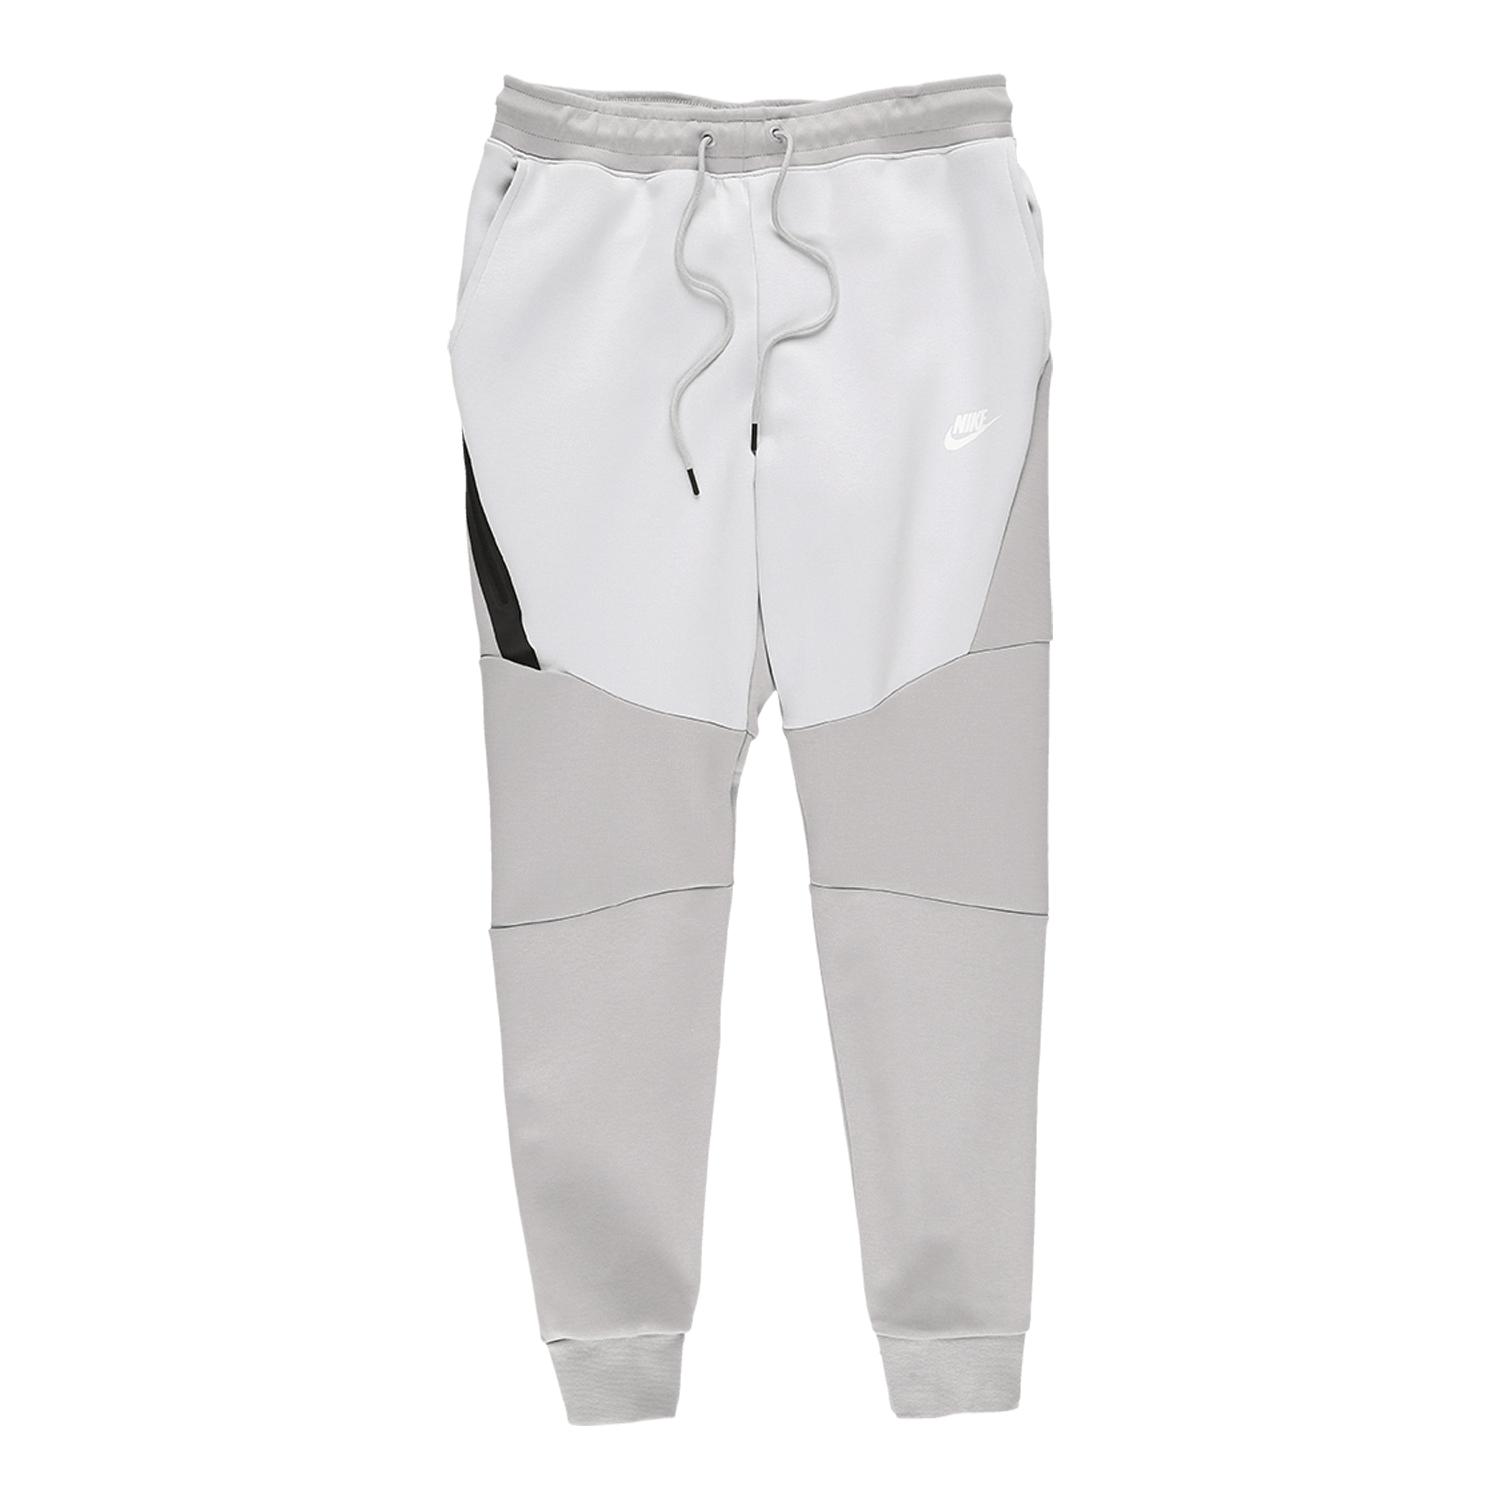 Nike Tech Fleece Jogger in Grey (Gray) for Men - Save 19% - Lyst